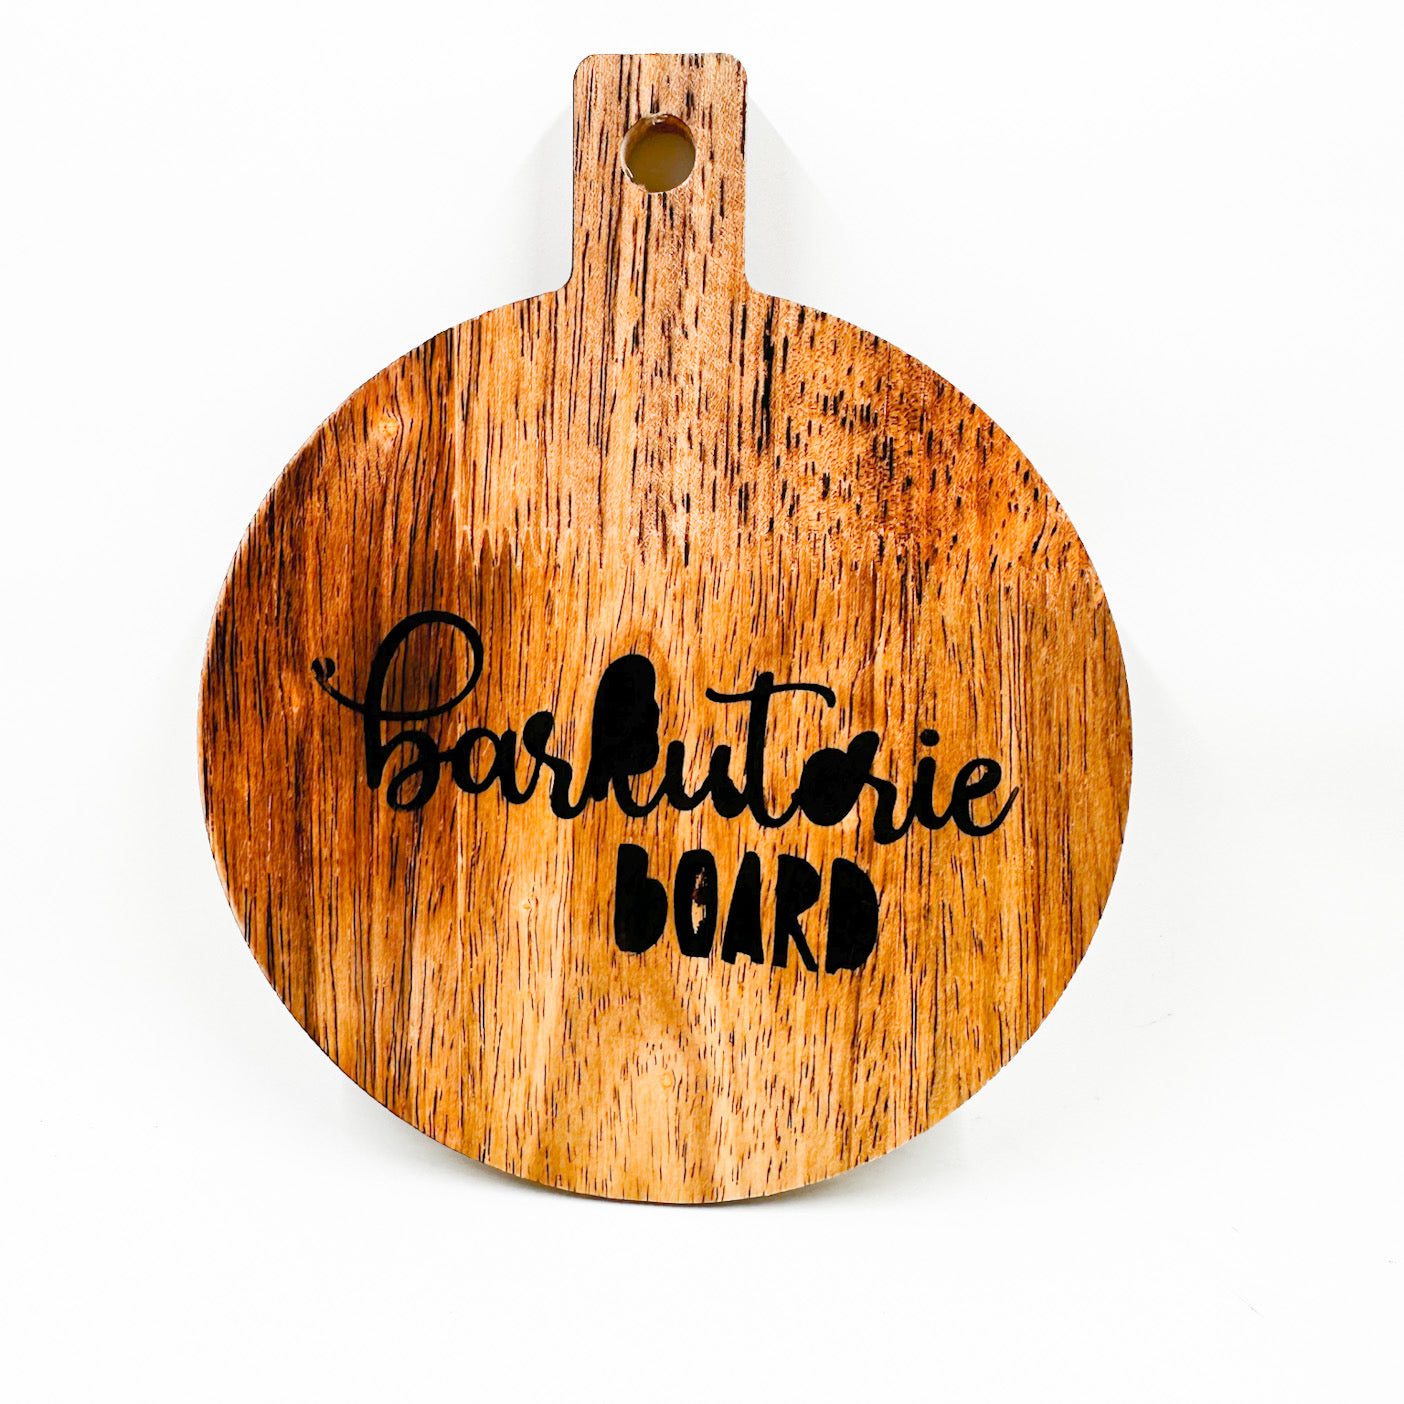 Mini Barkcuterie Board